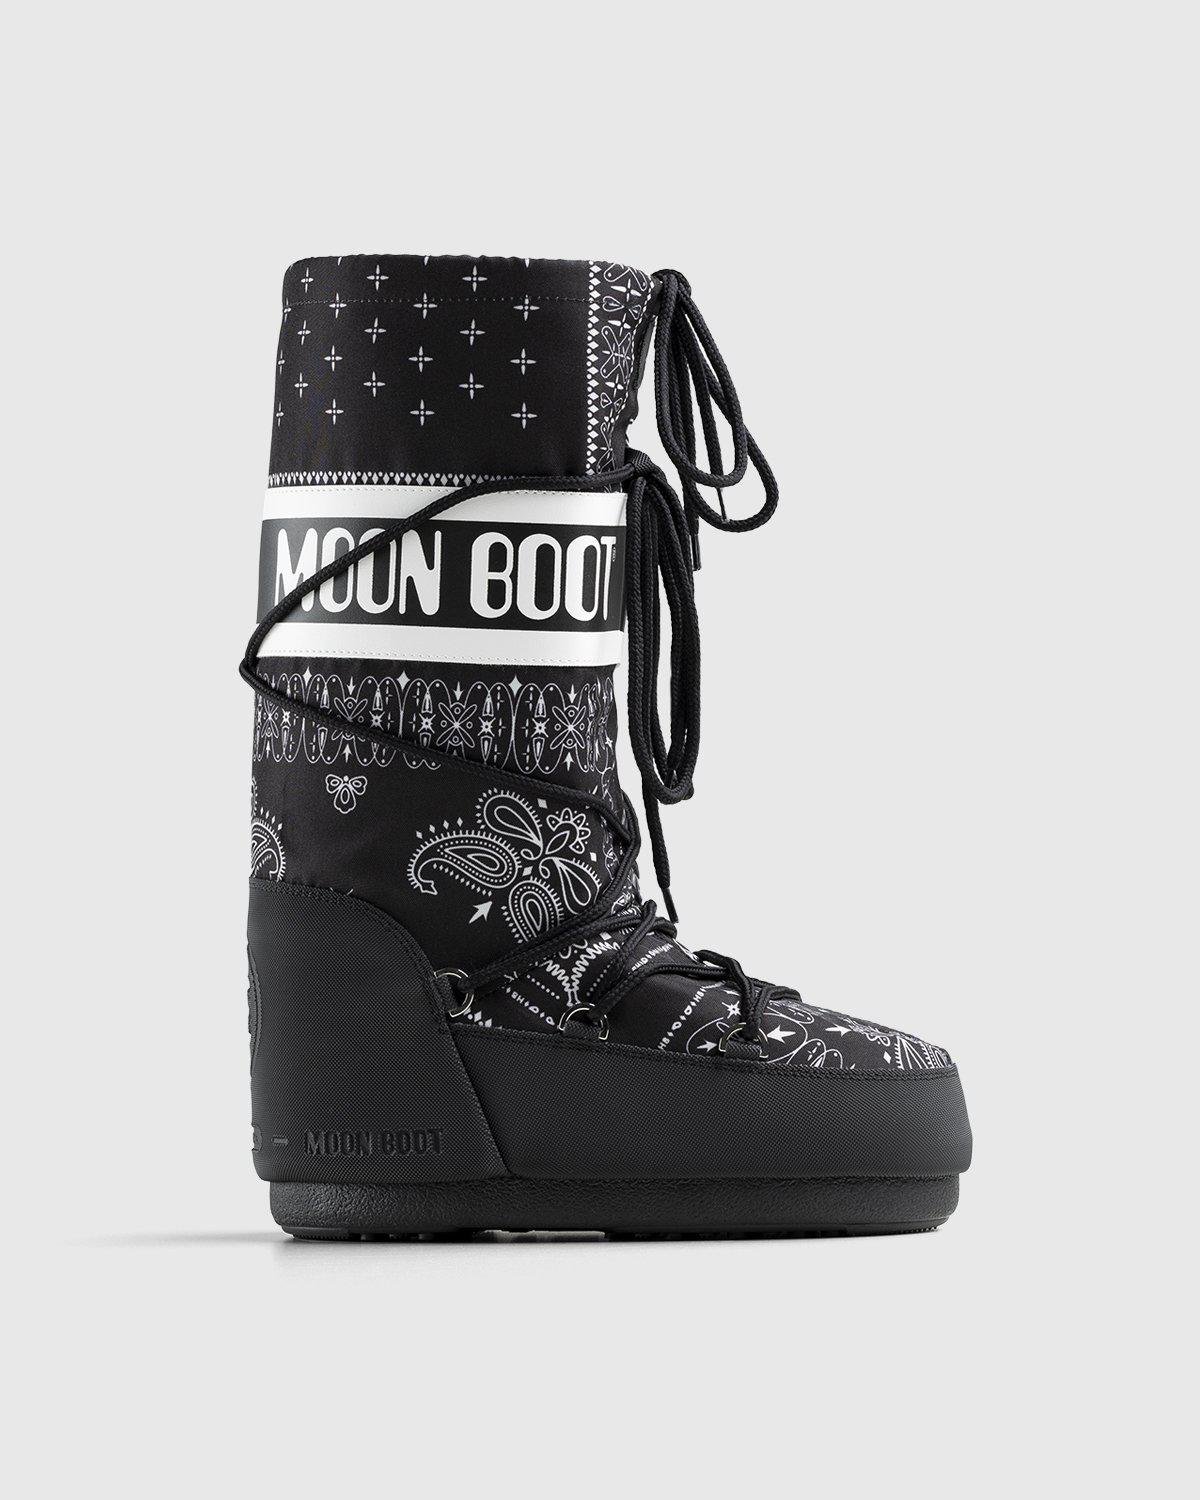 Moon Boot x HighsnobietyIcon Boot Bandana Black by HIGHSNOBIETY